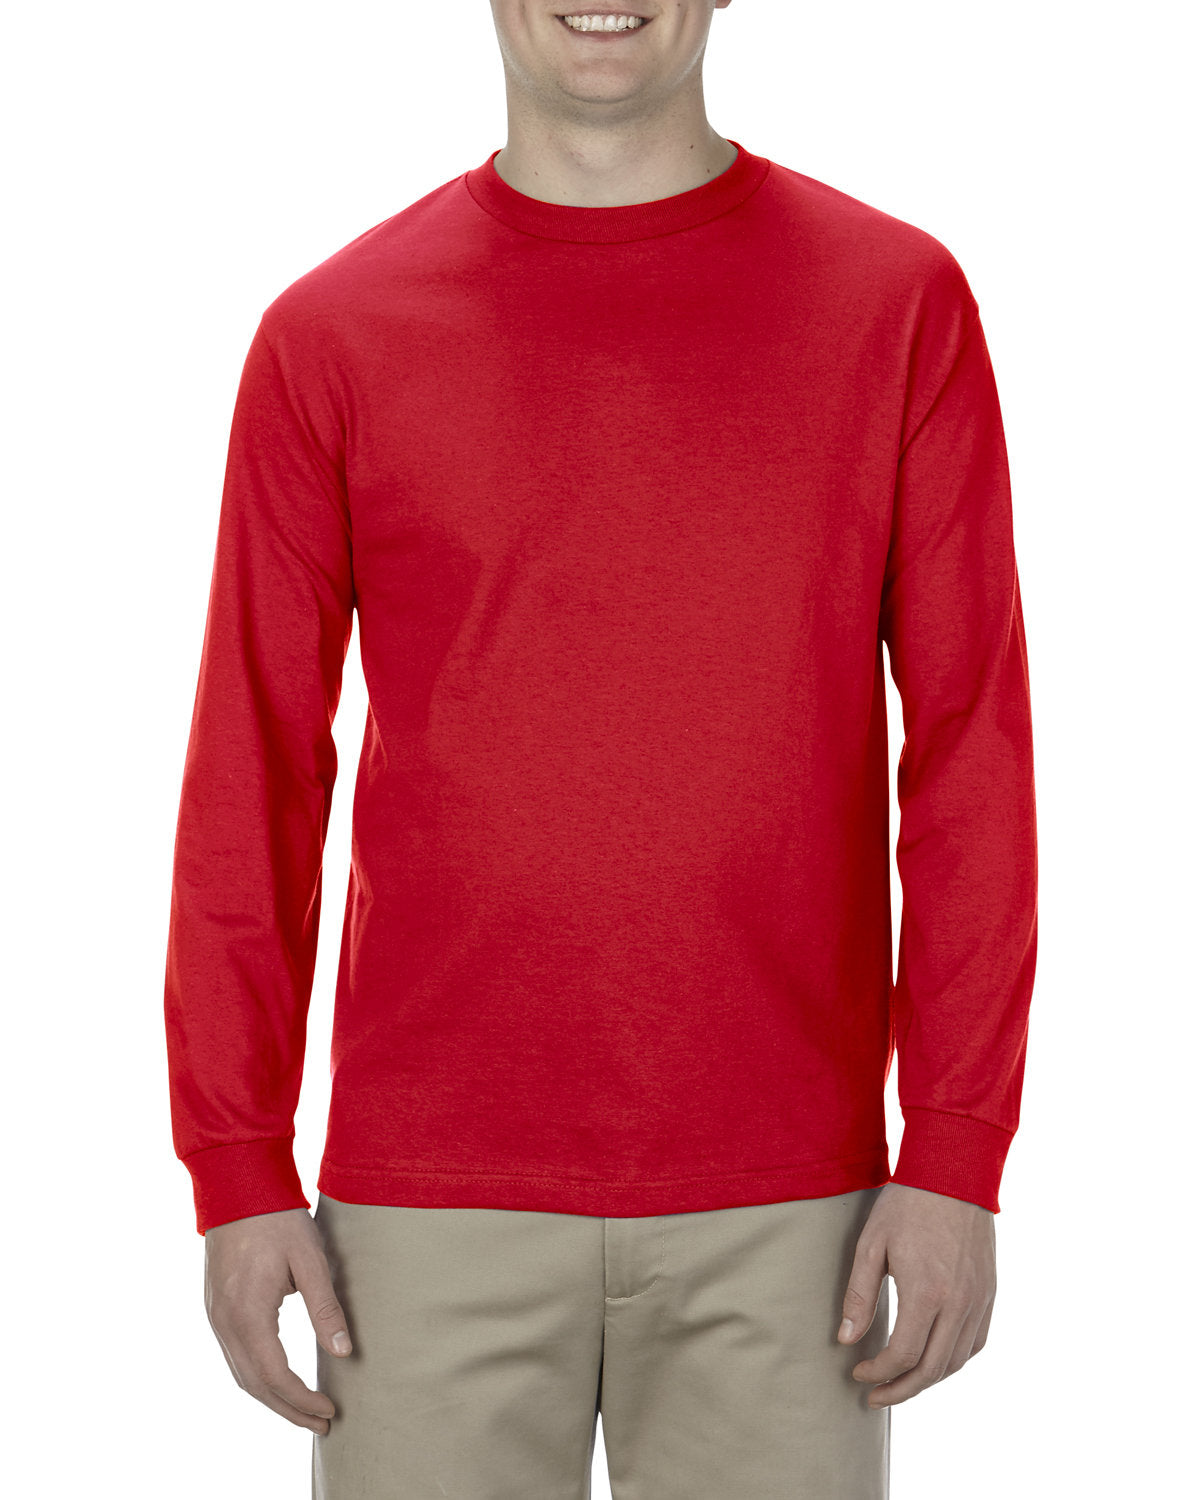 Timeless Comfort: American Apparel Adult 6.0 oz., 100% Cotton Long-Sleeve T-Shirt - Apparel Globe